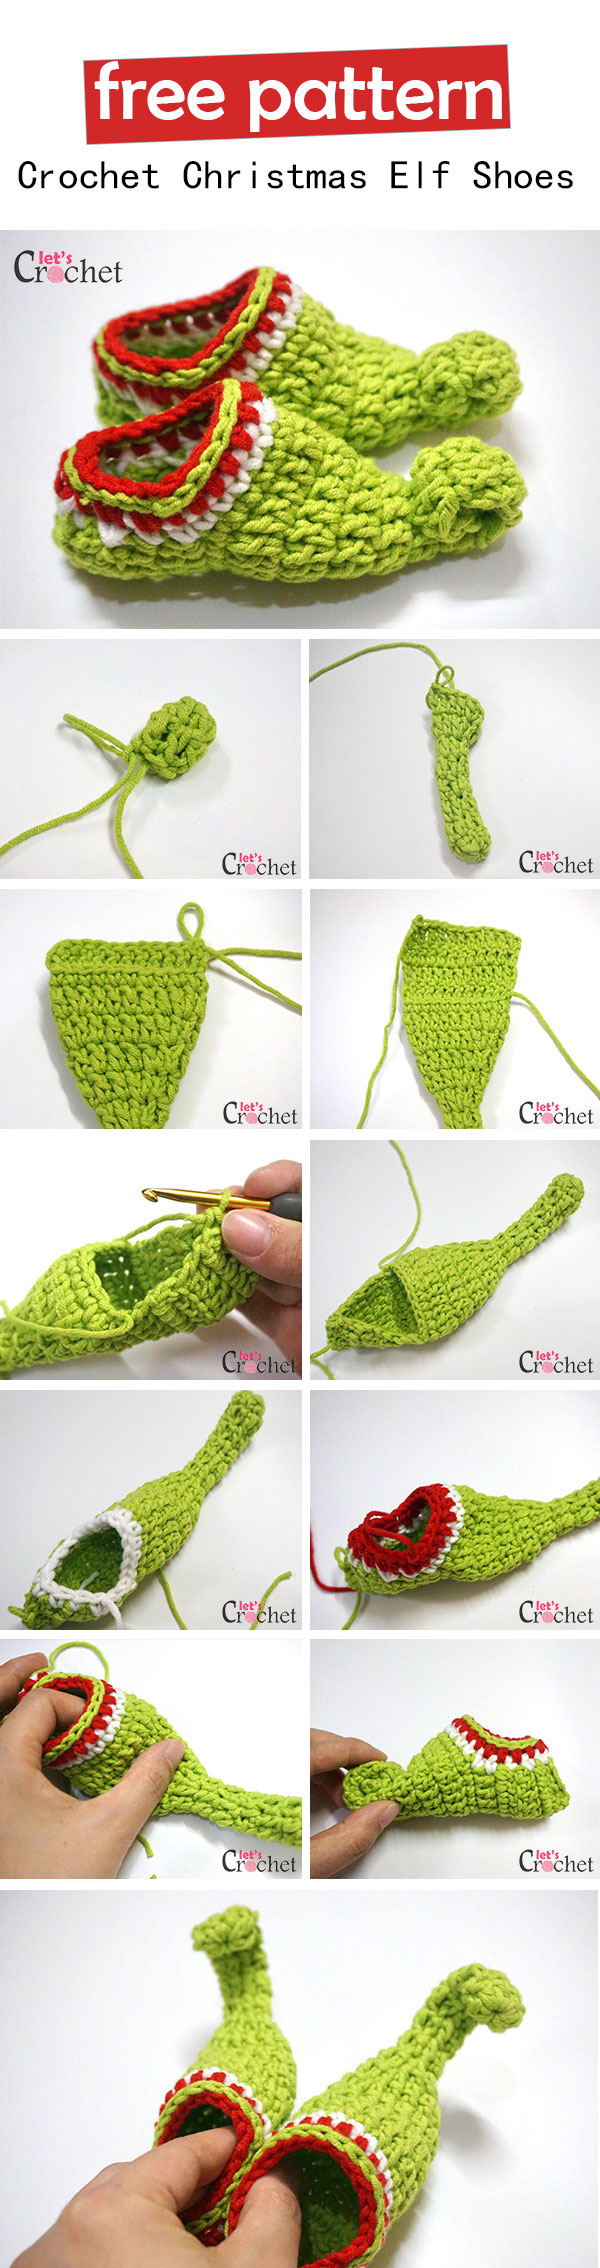 Christmas Elf Shoes free crochet pattern For Kids